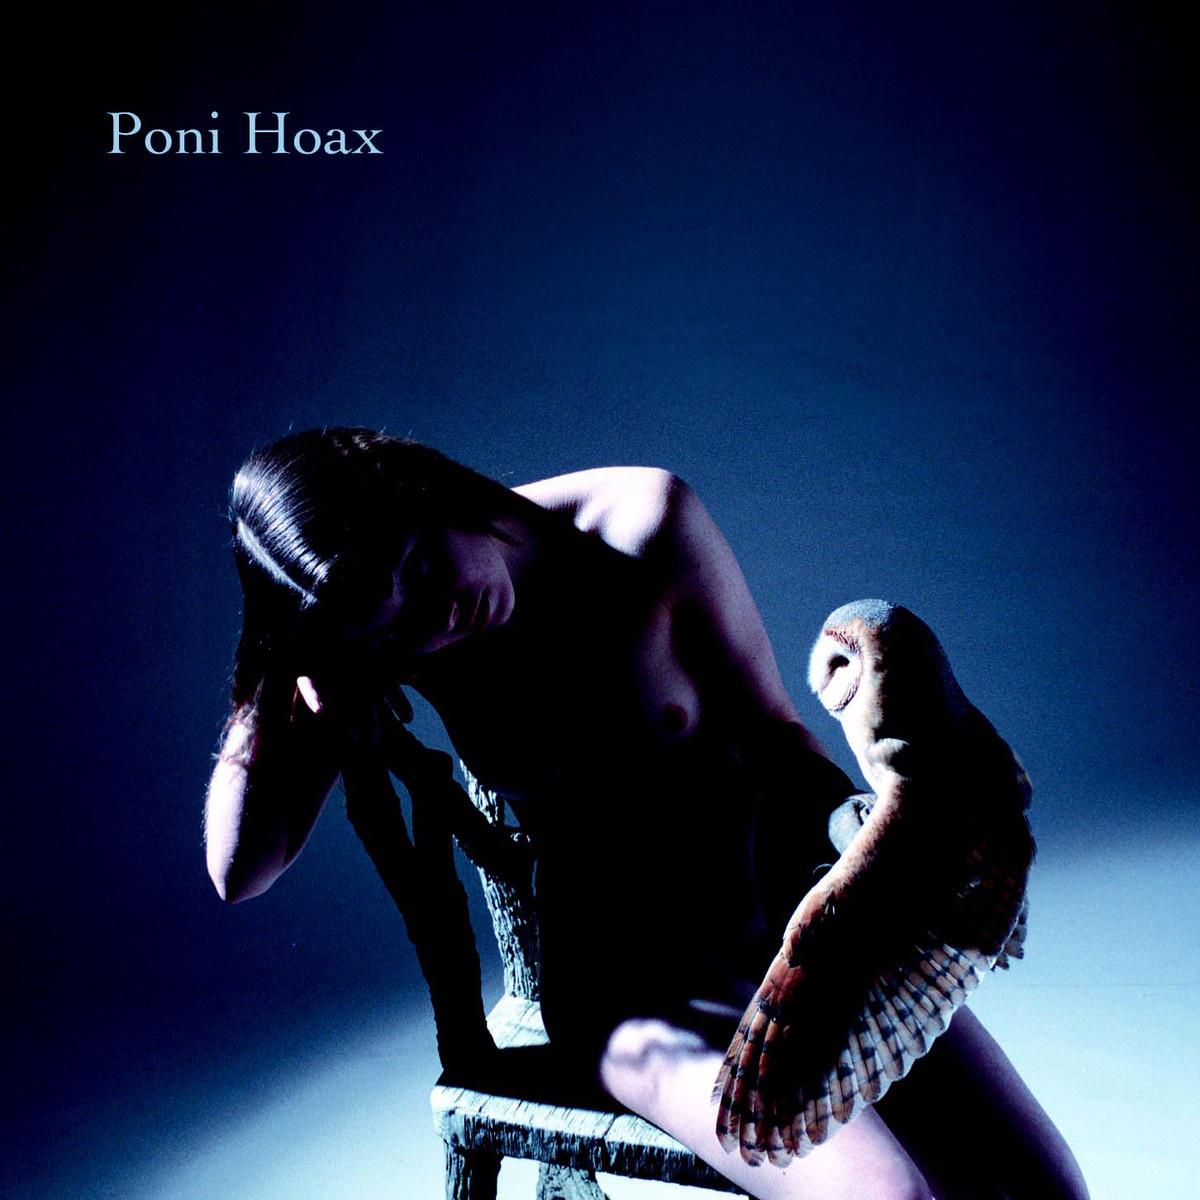 Poni Hoax - Le fil du temps (feat. Ami Sioux, Joakim) [Piano Version]